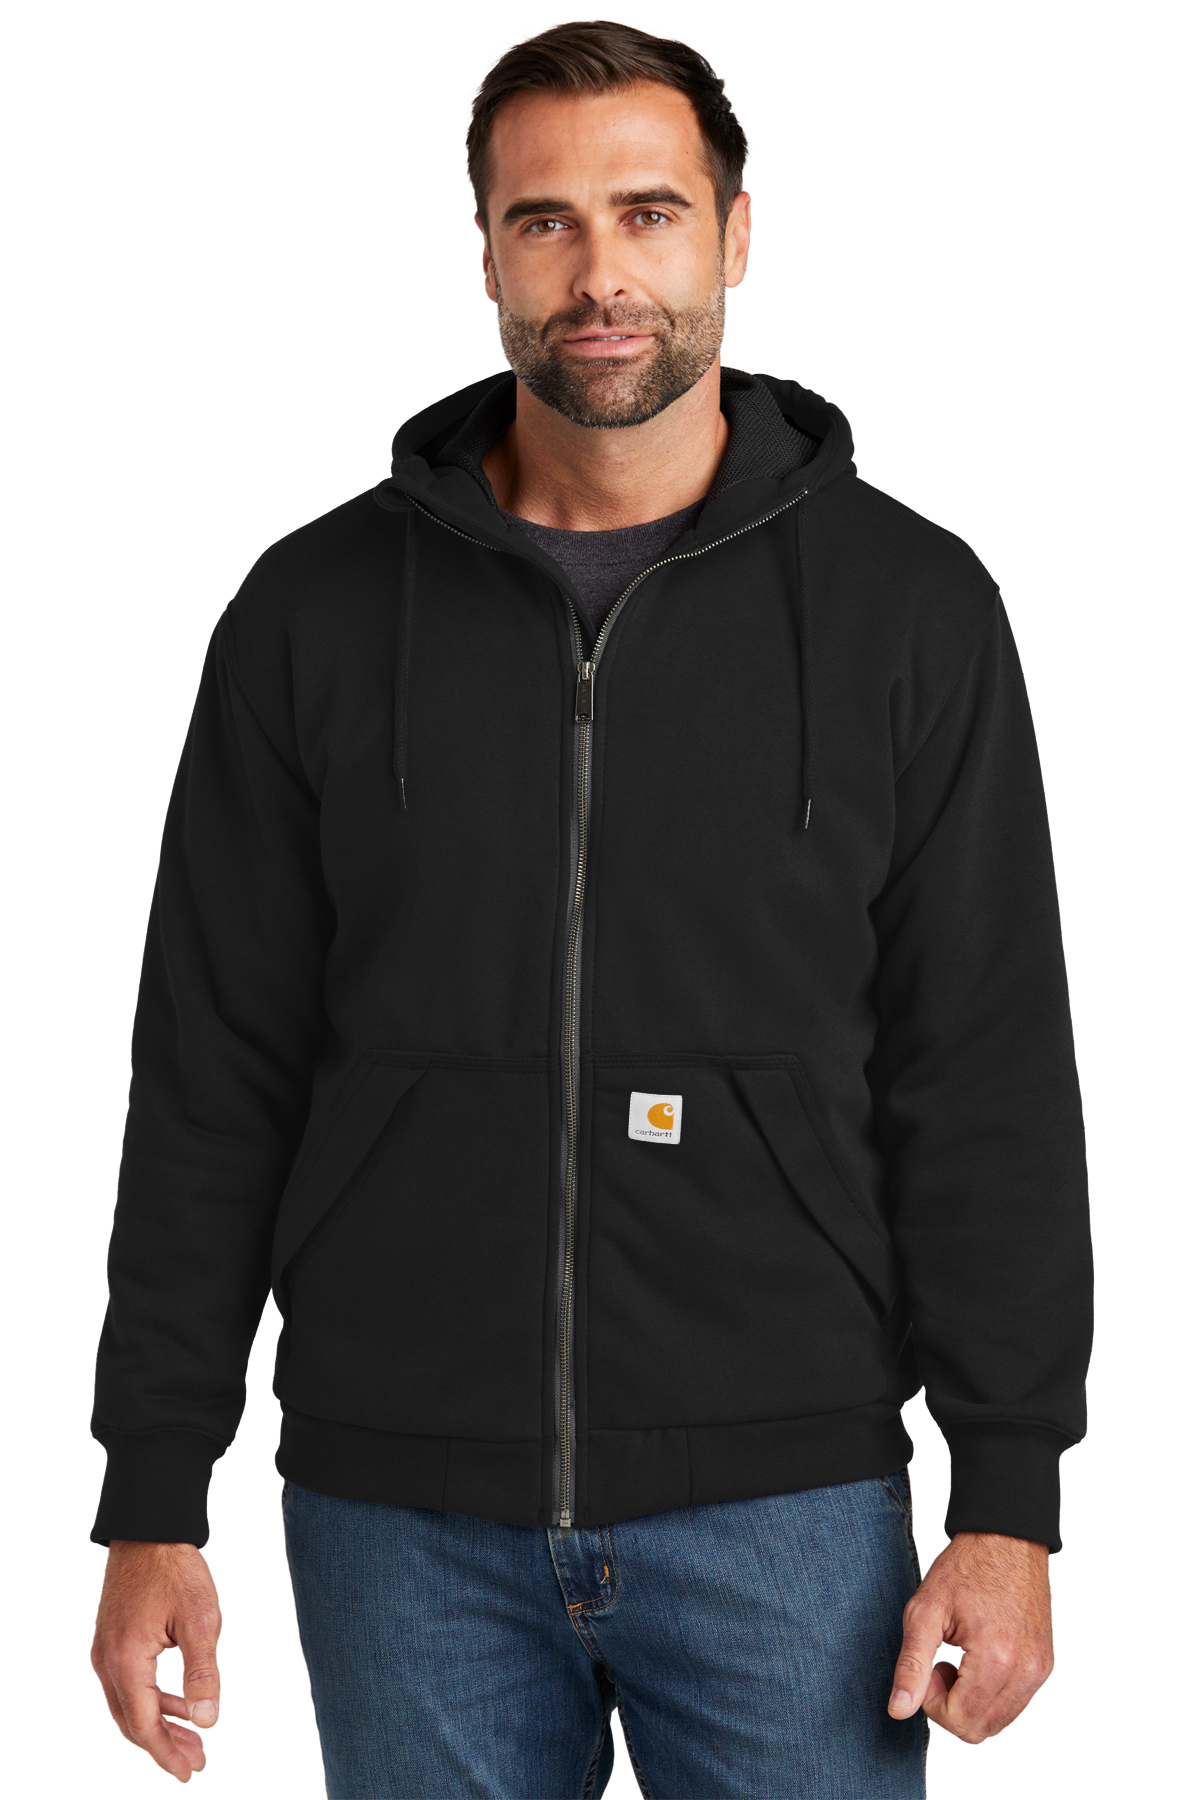 Carhartt Midweight Thermal-Lined Full-Zip Sweatshirt | Product | SanMar